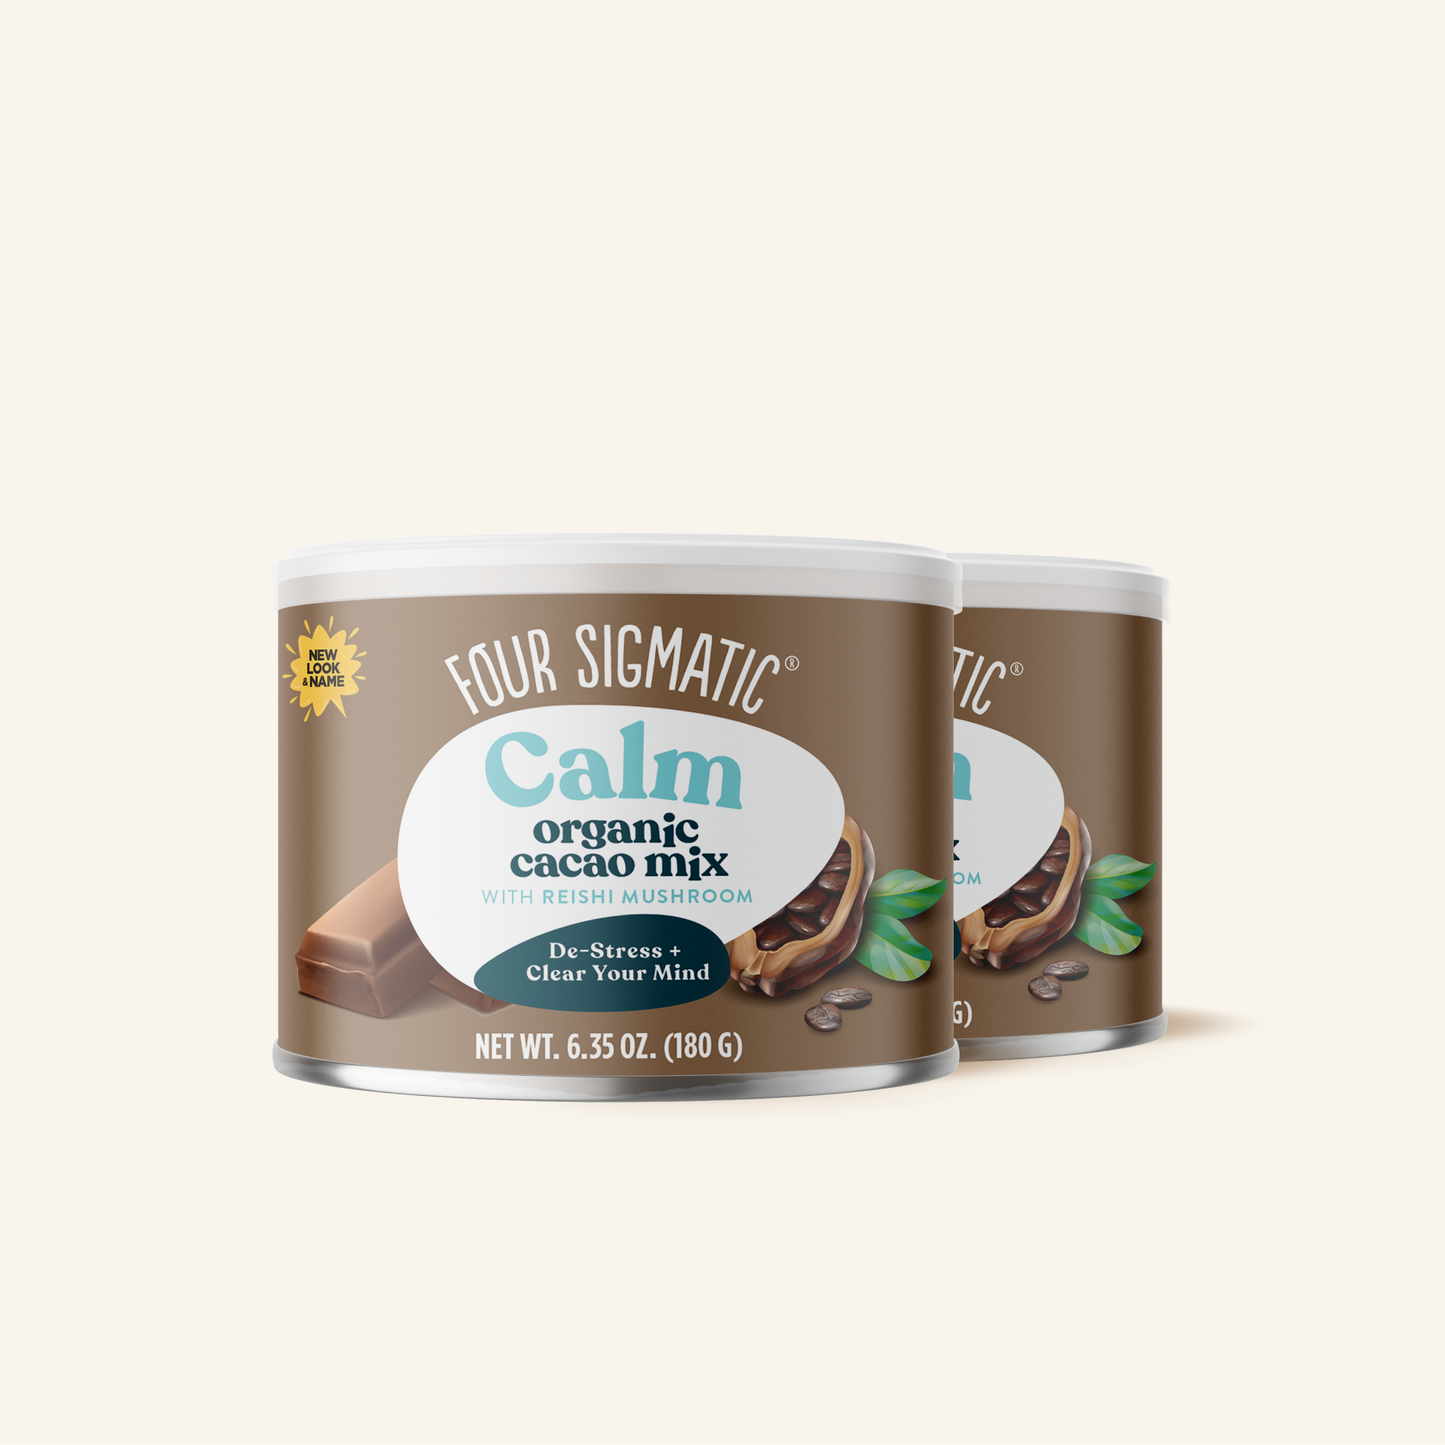 Calm Organic Cacao Multiserve